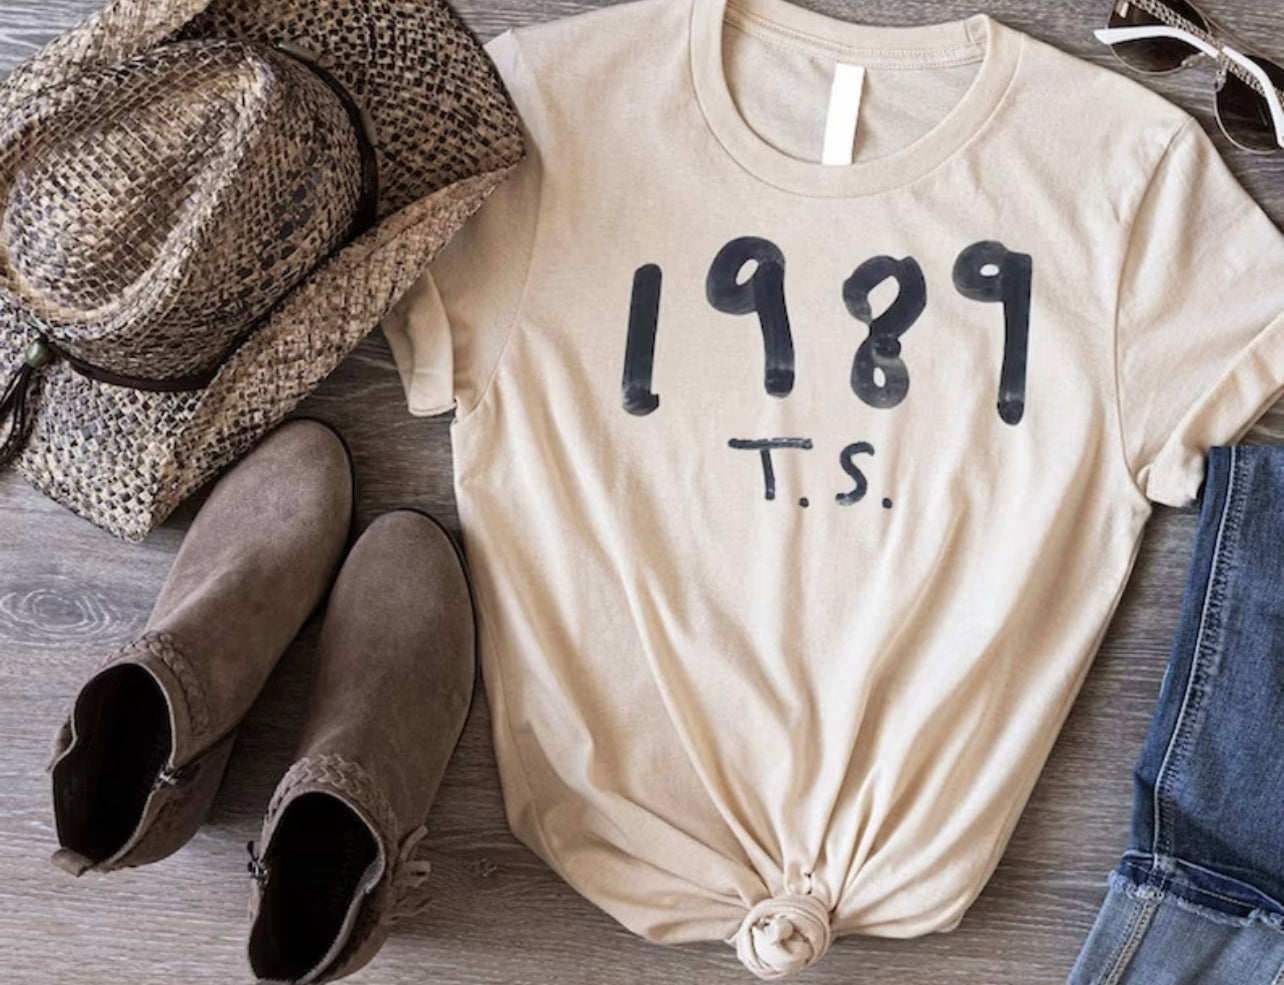 T.S. 1989 Shirt| Taylor shirt| T swift shirt| 1989 taylor swift tee| gift for taylor swift fan| Taylor shirt